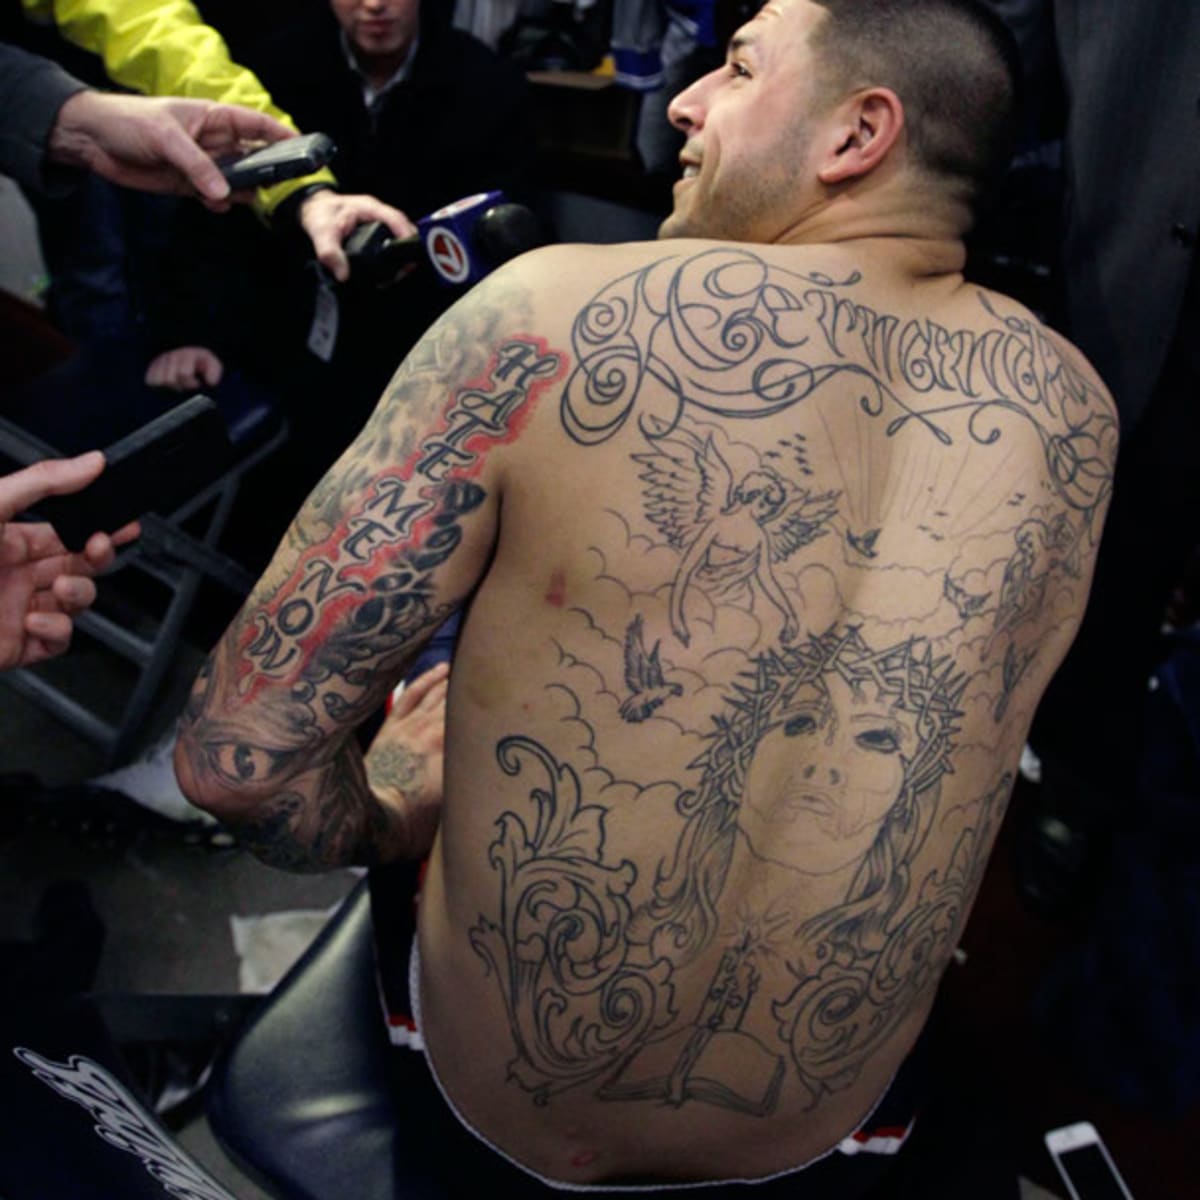 PHOTOS: 20 Athletes tattooed to tease - Rediff.com